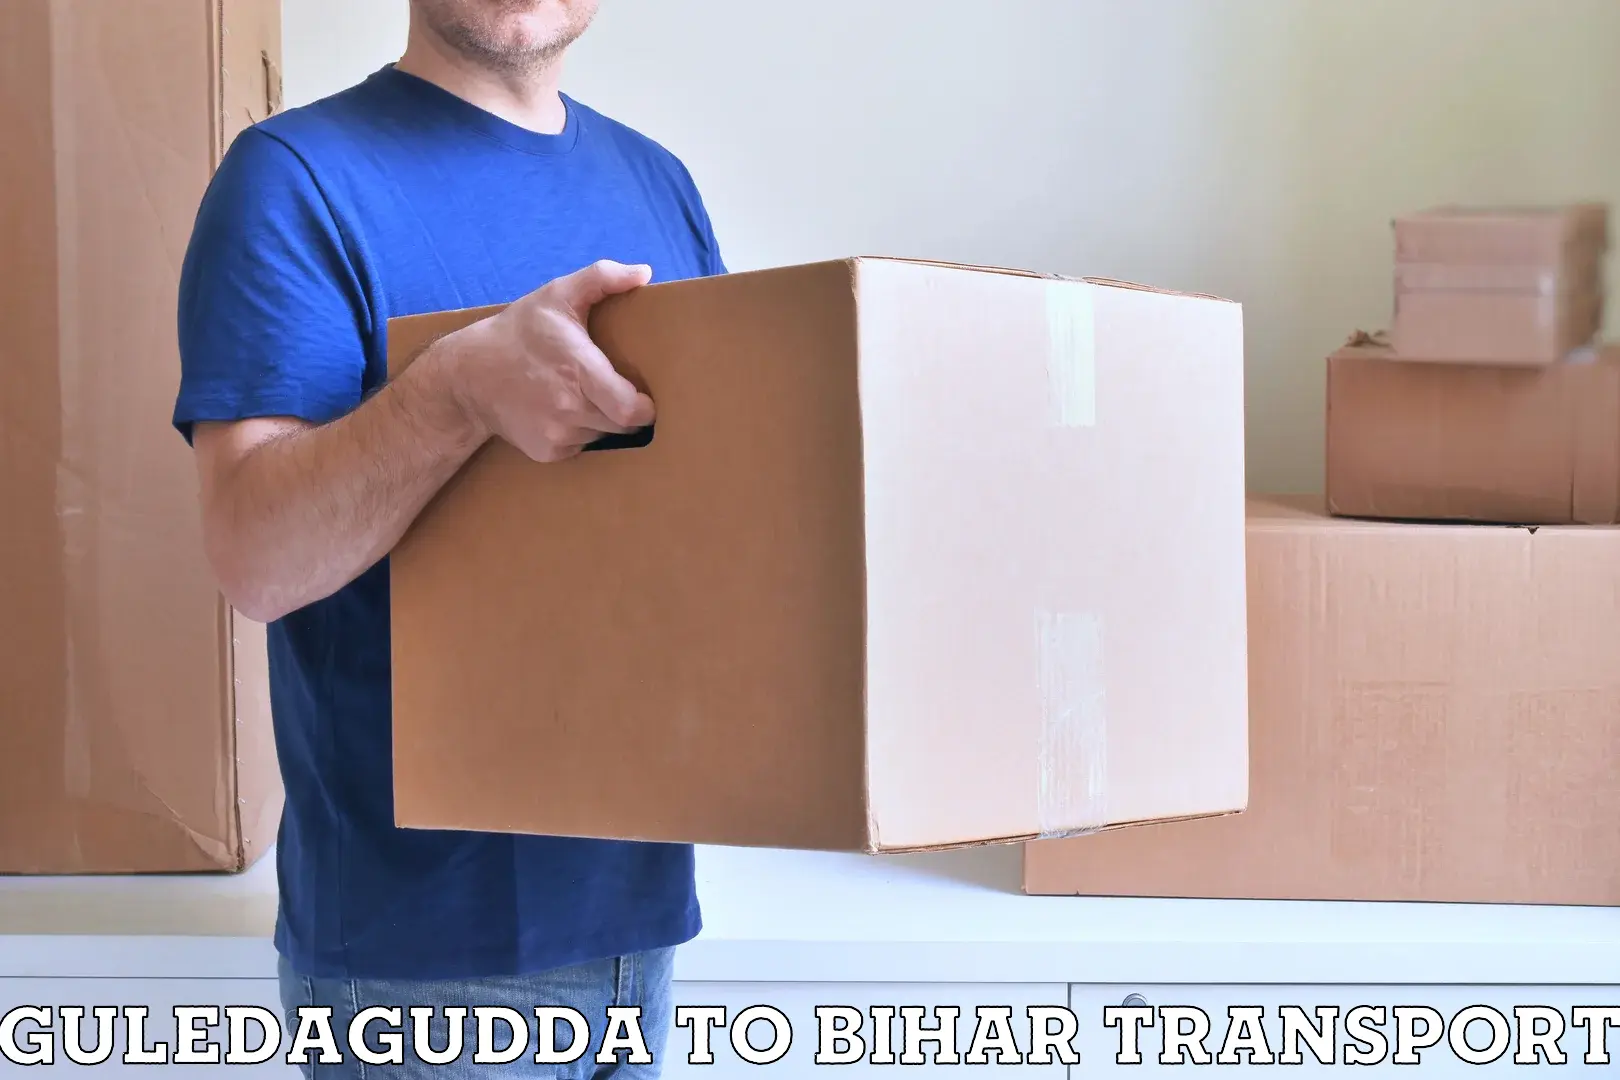 Transport in sharing Guledagudda to Sandesh